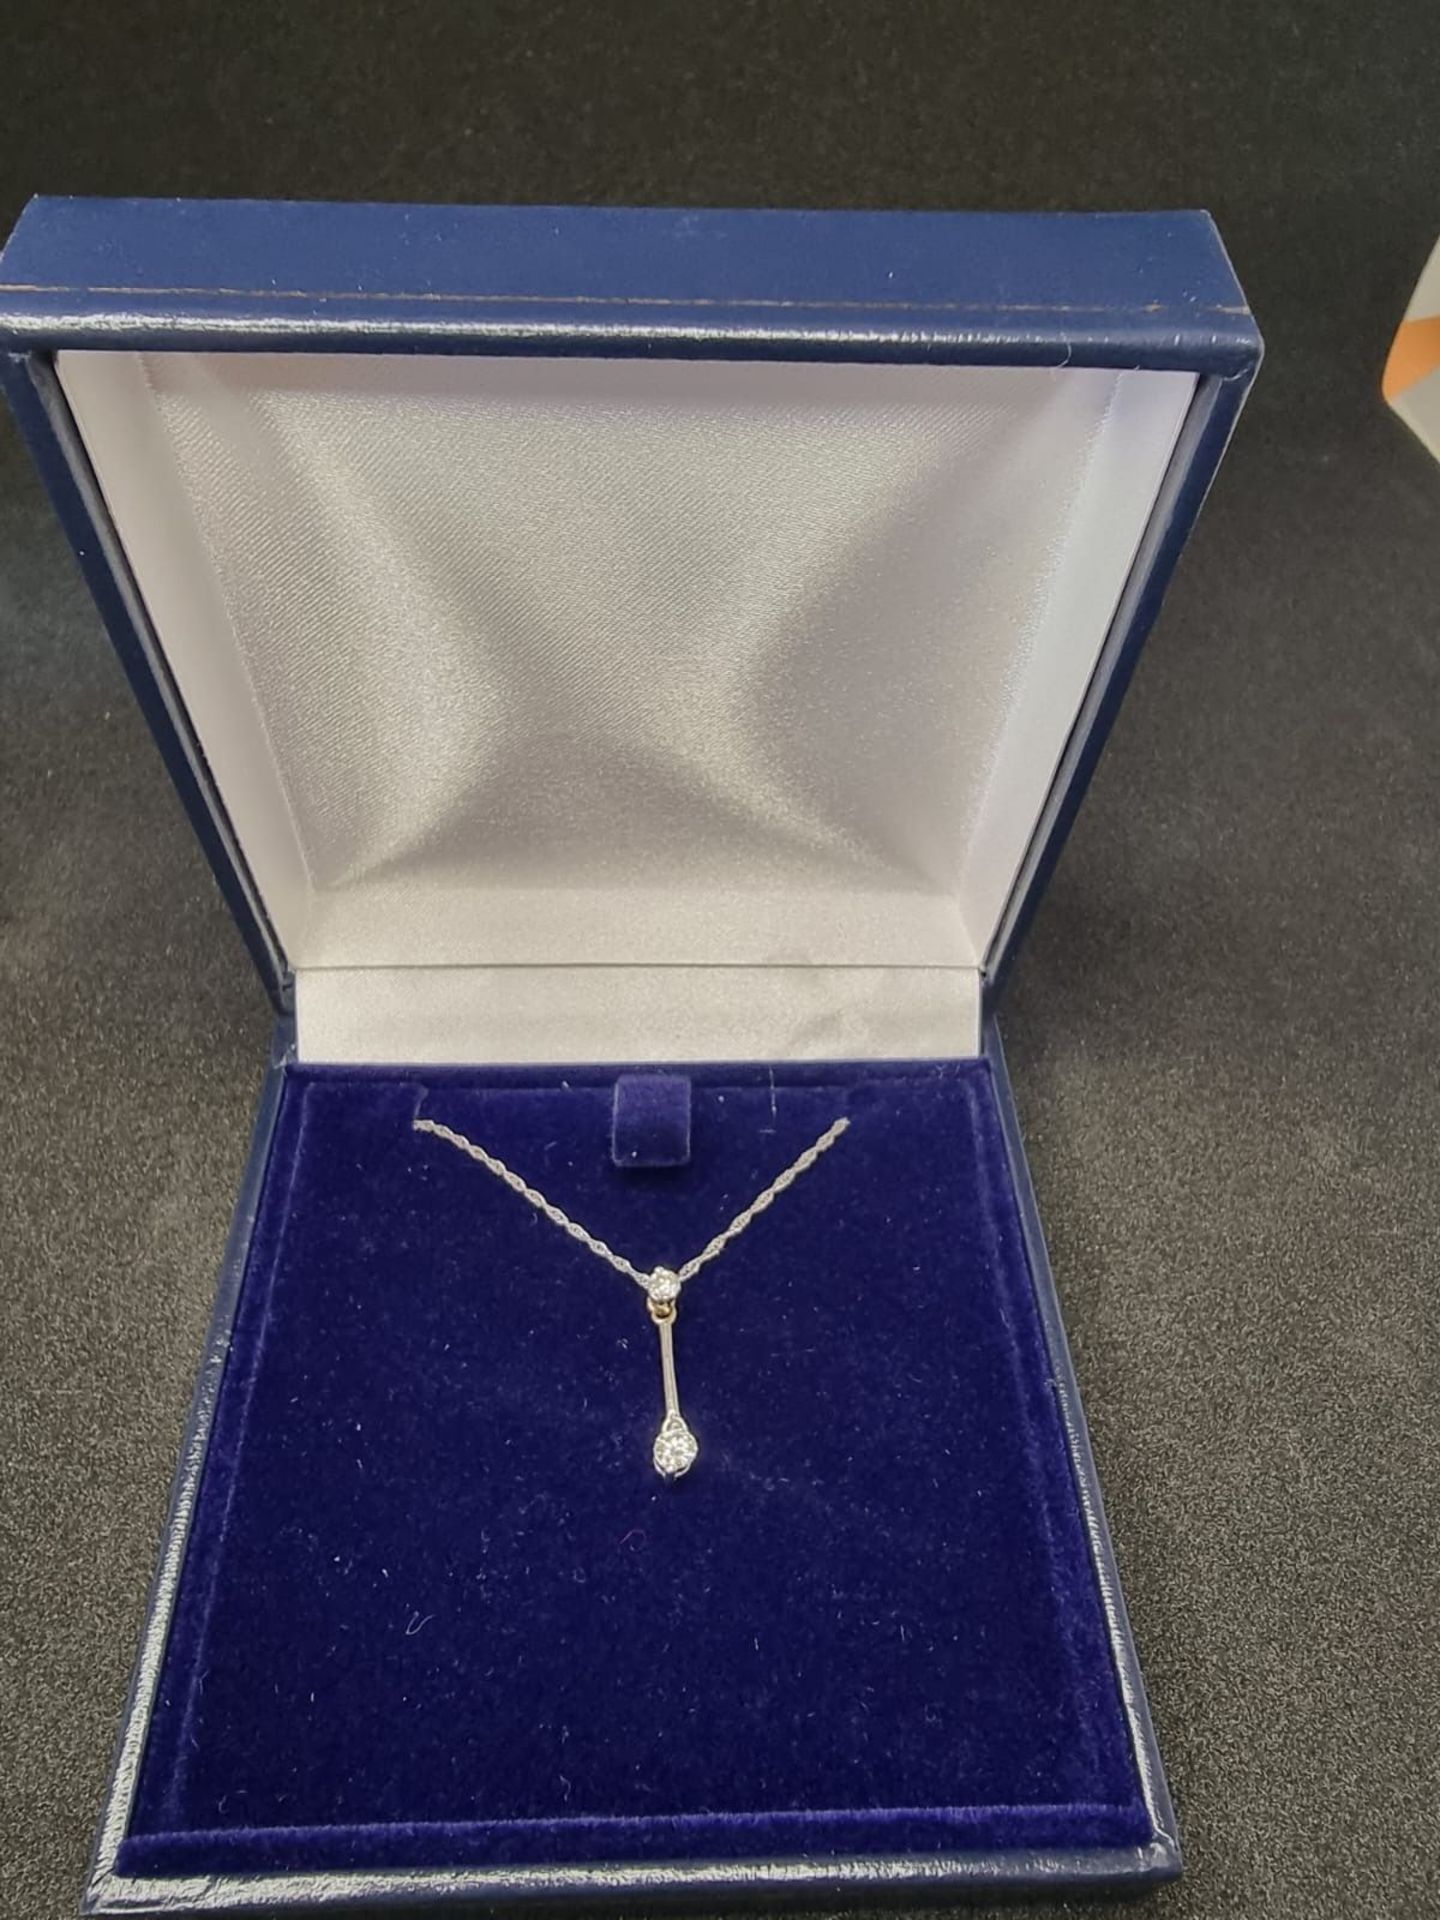 Unique 18 Carat White Gold Necklace with 0.2 Carat Diamond Drop Pendant - Image 2 of 2